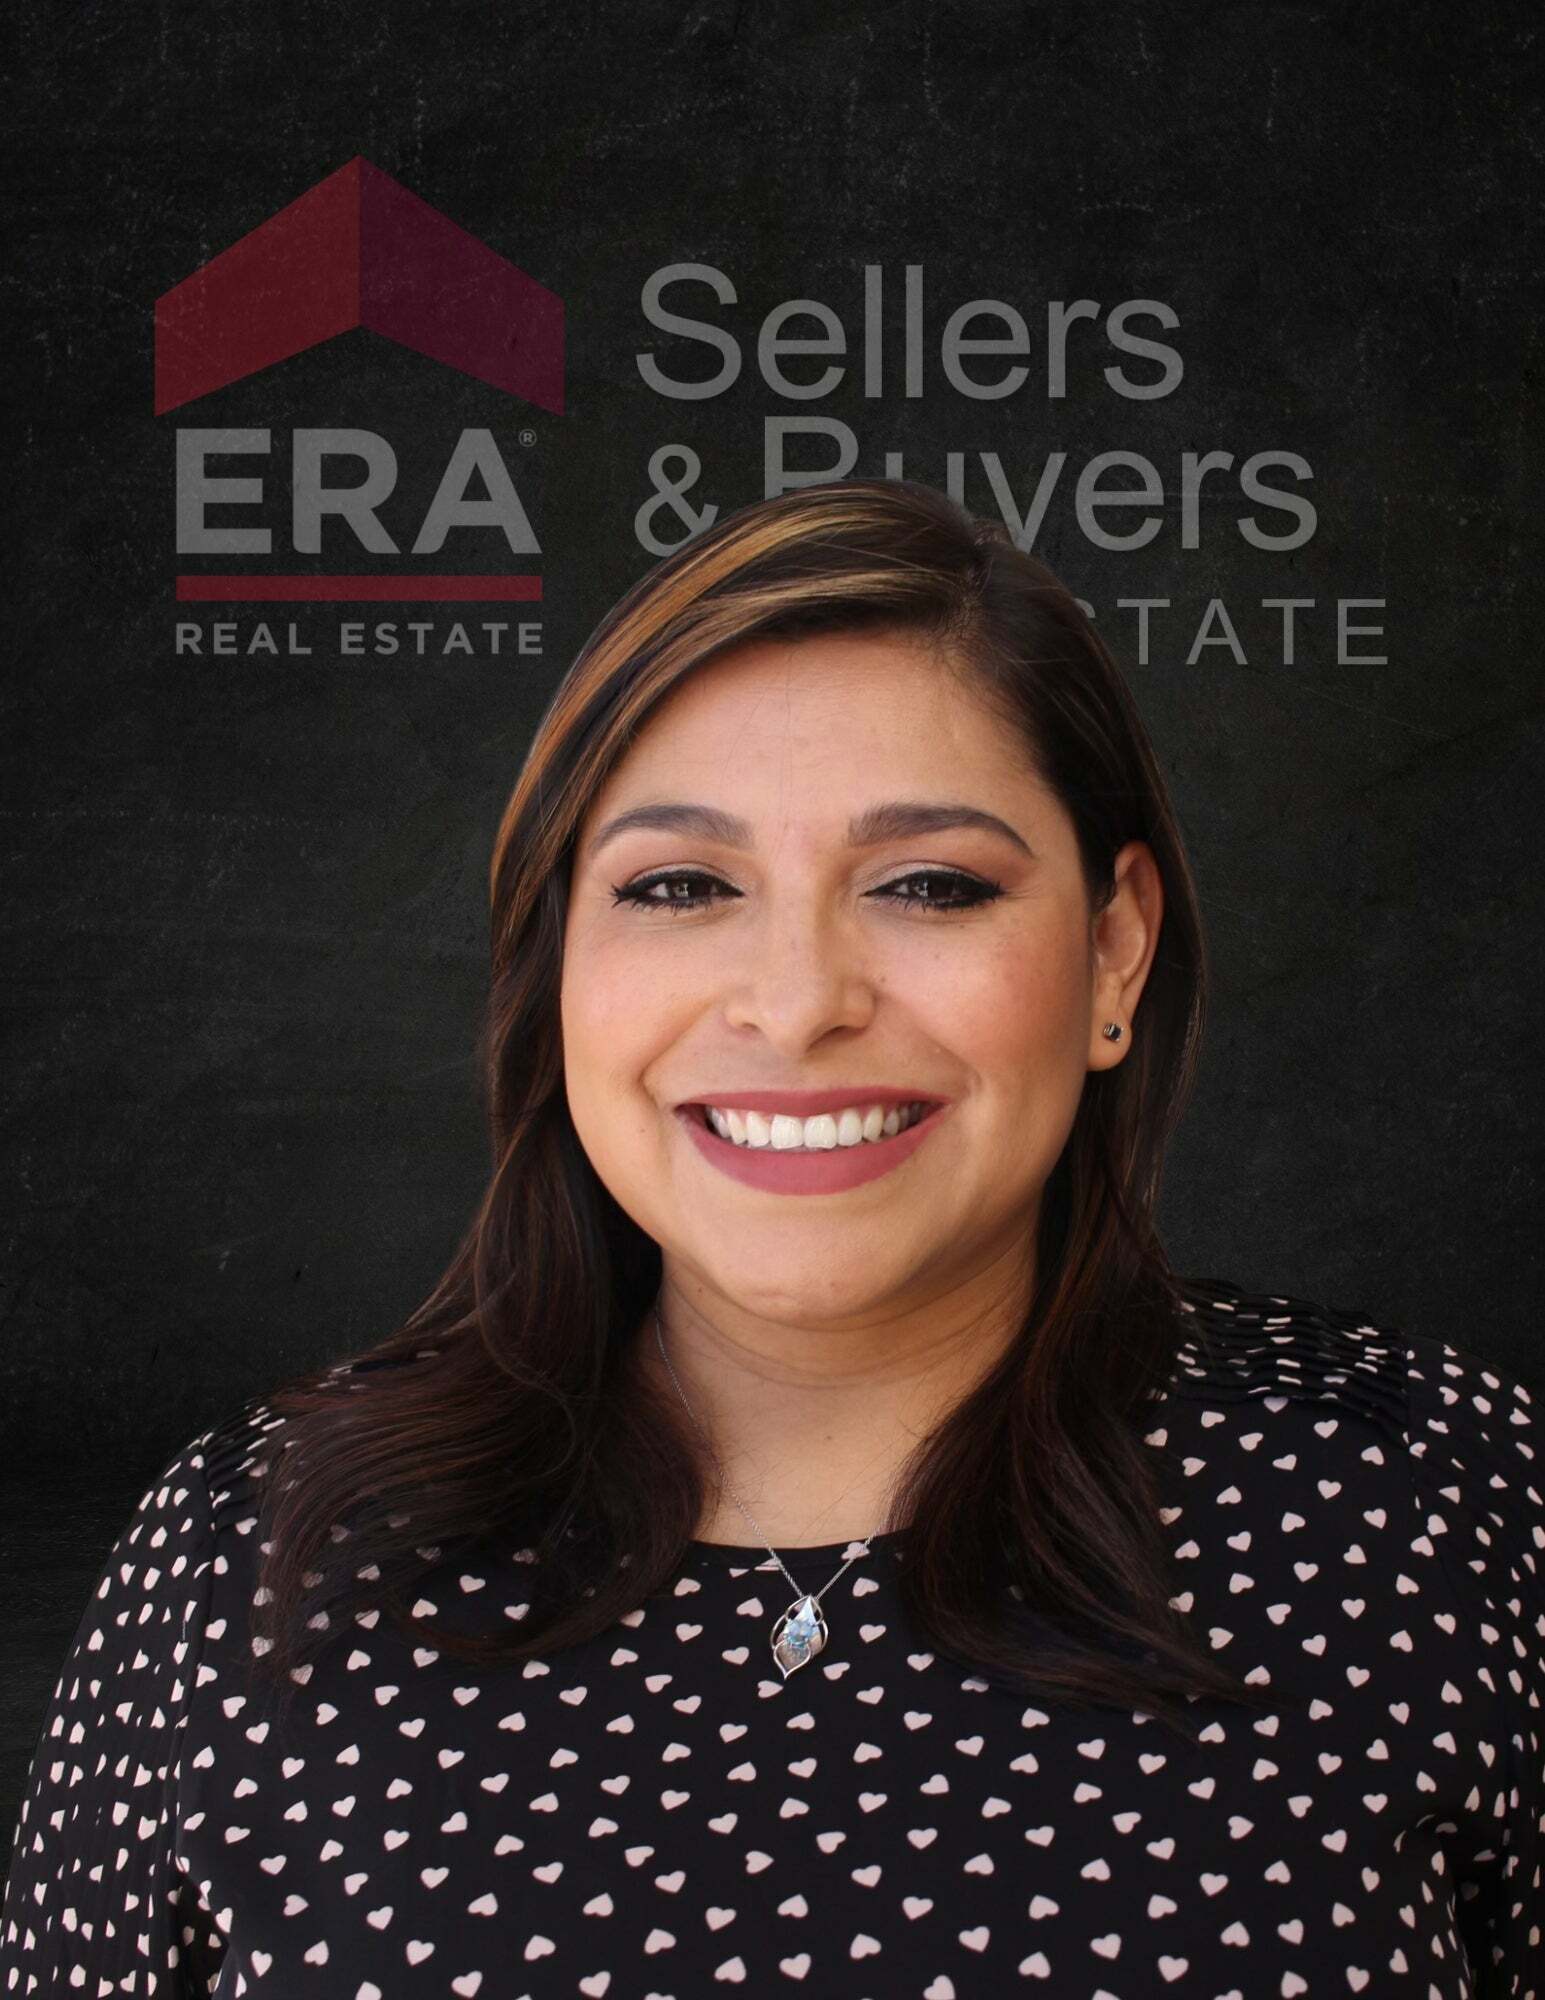 Priscilla Lopez, Real Estate Salesperson in El Paso, ERA Sellers & Buyers Real Estate